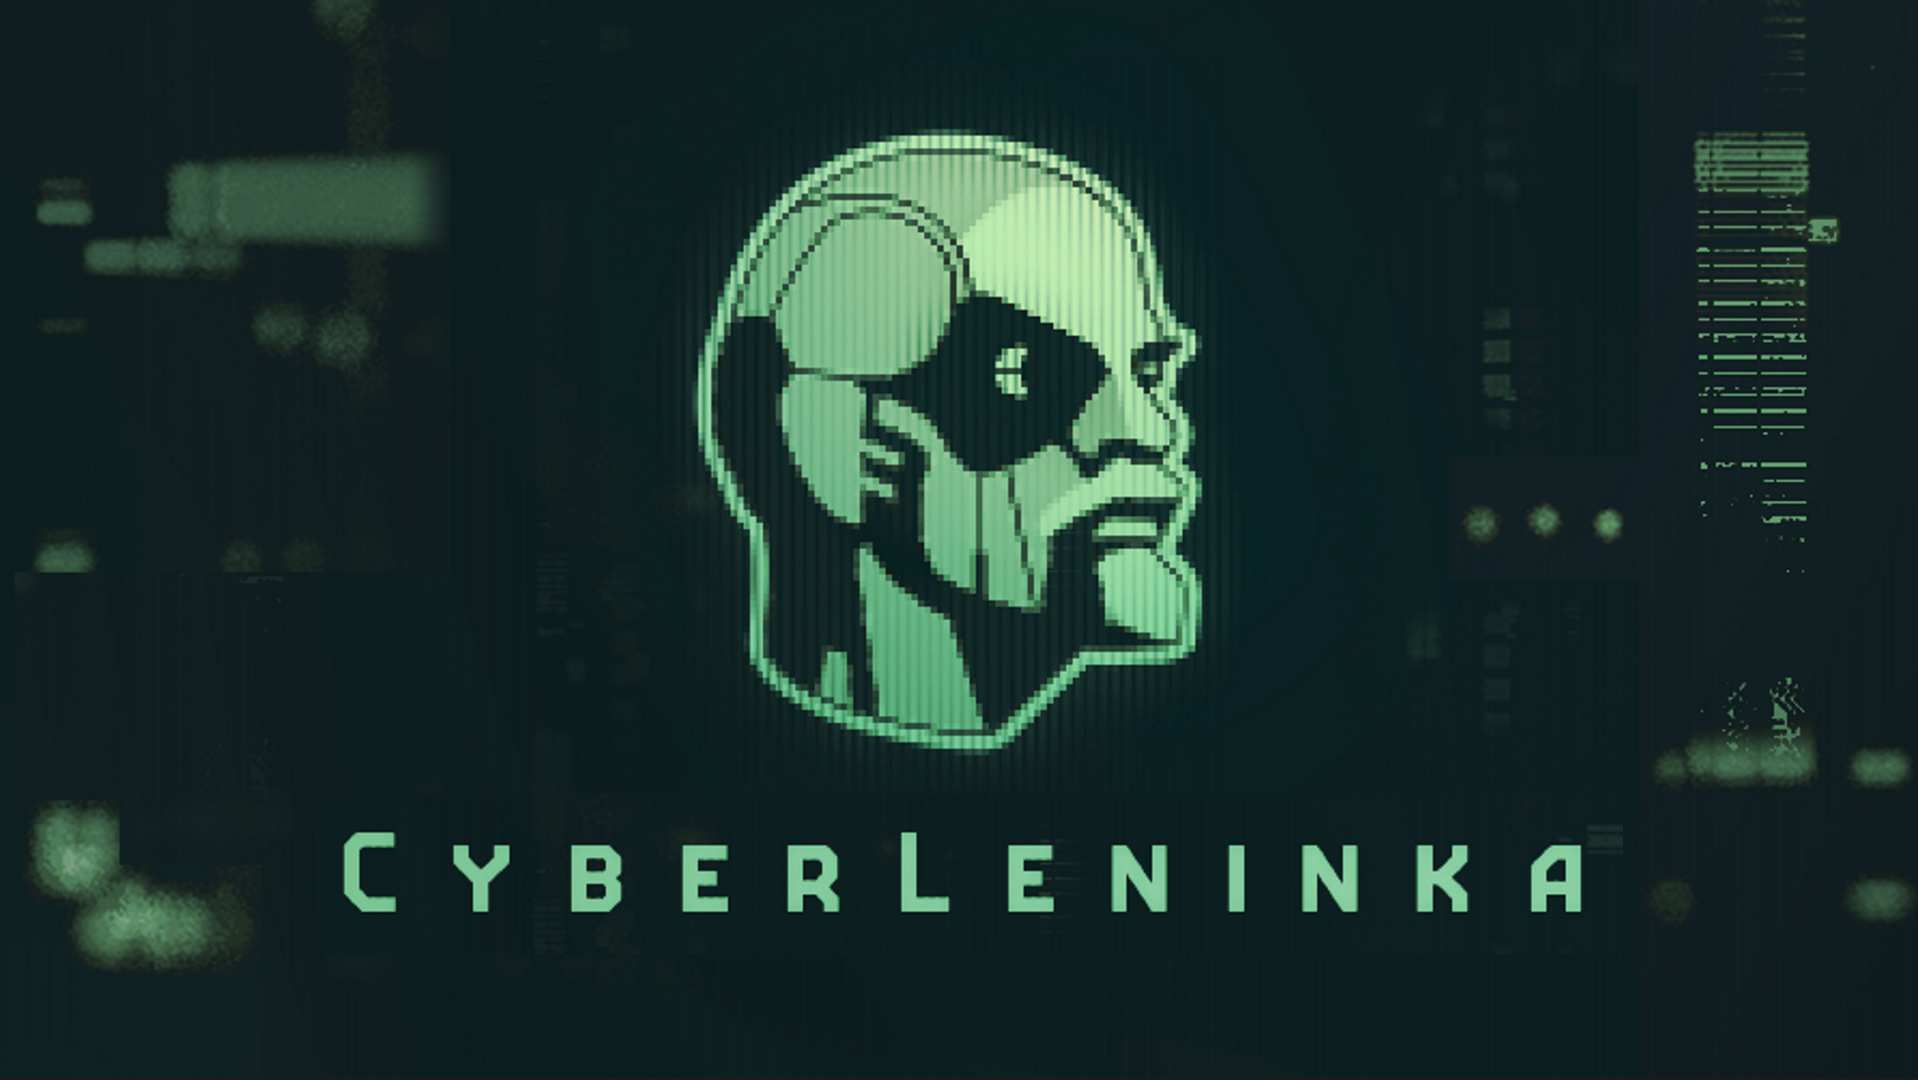 cyberleninka.org